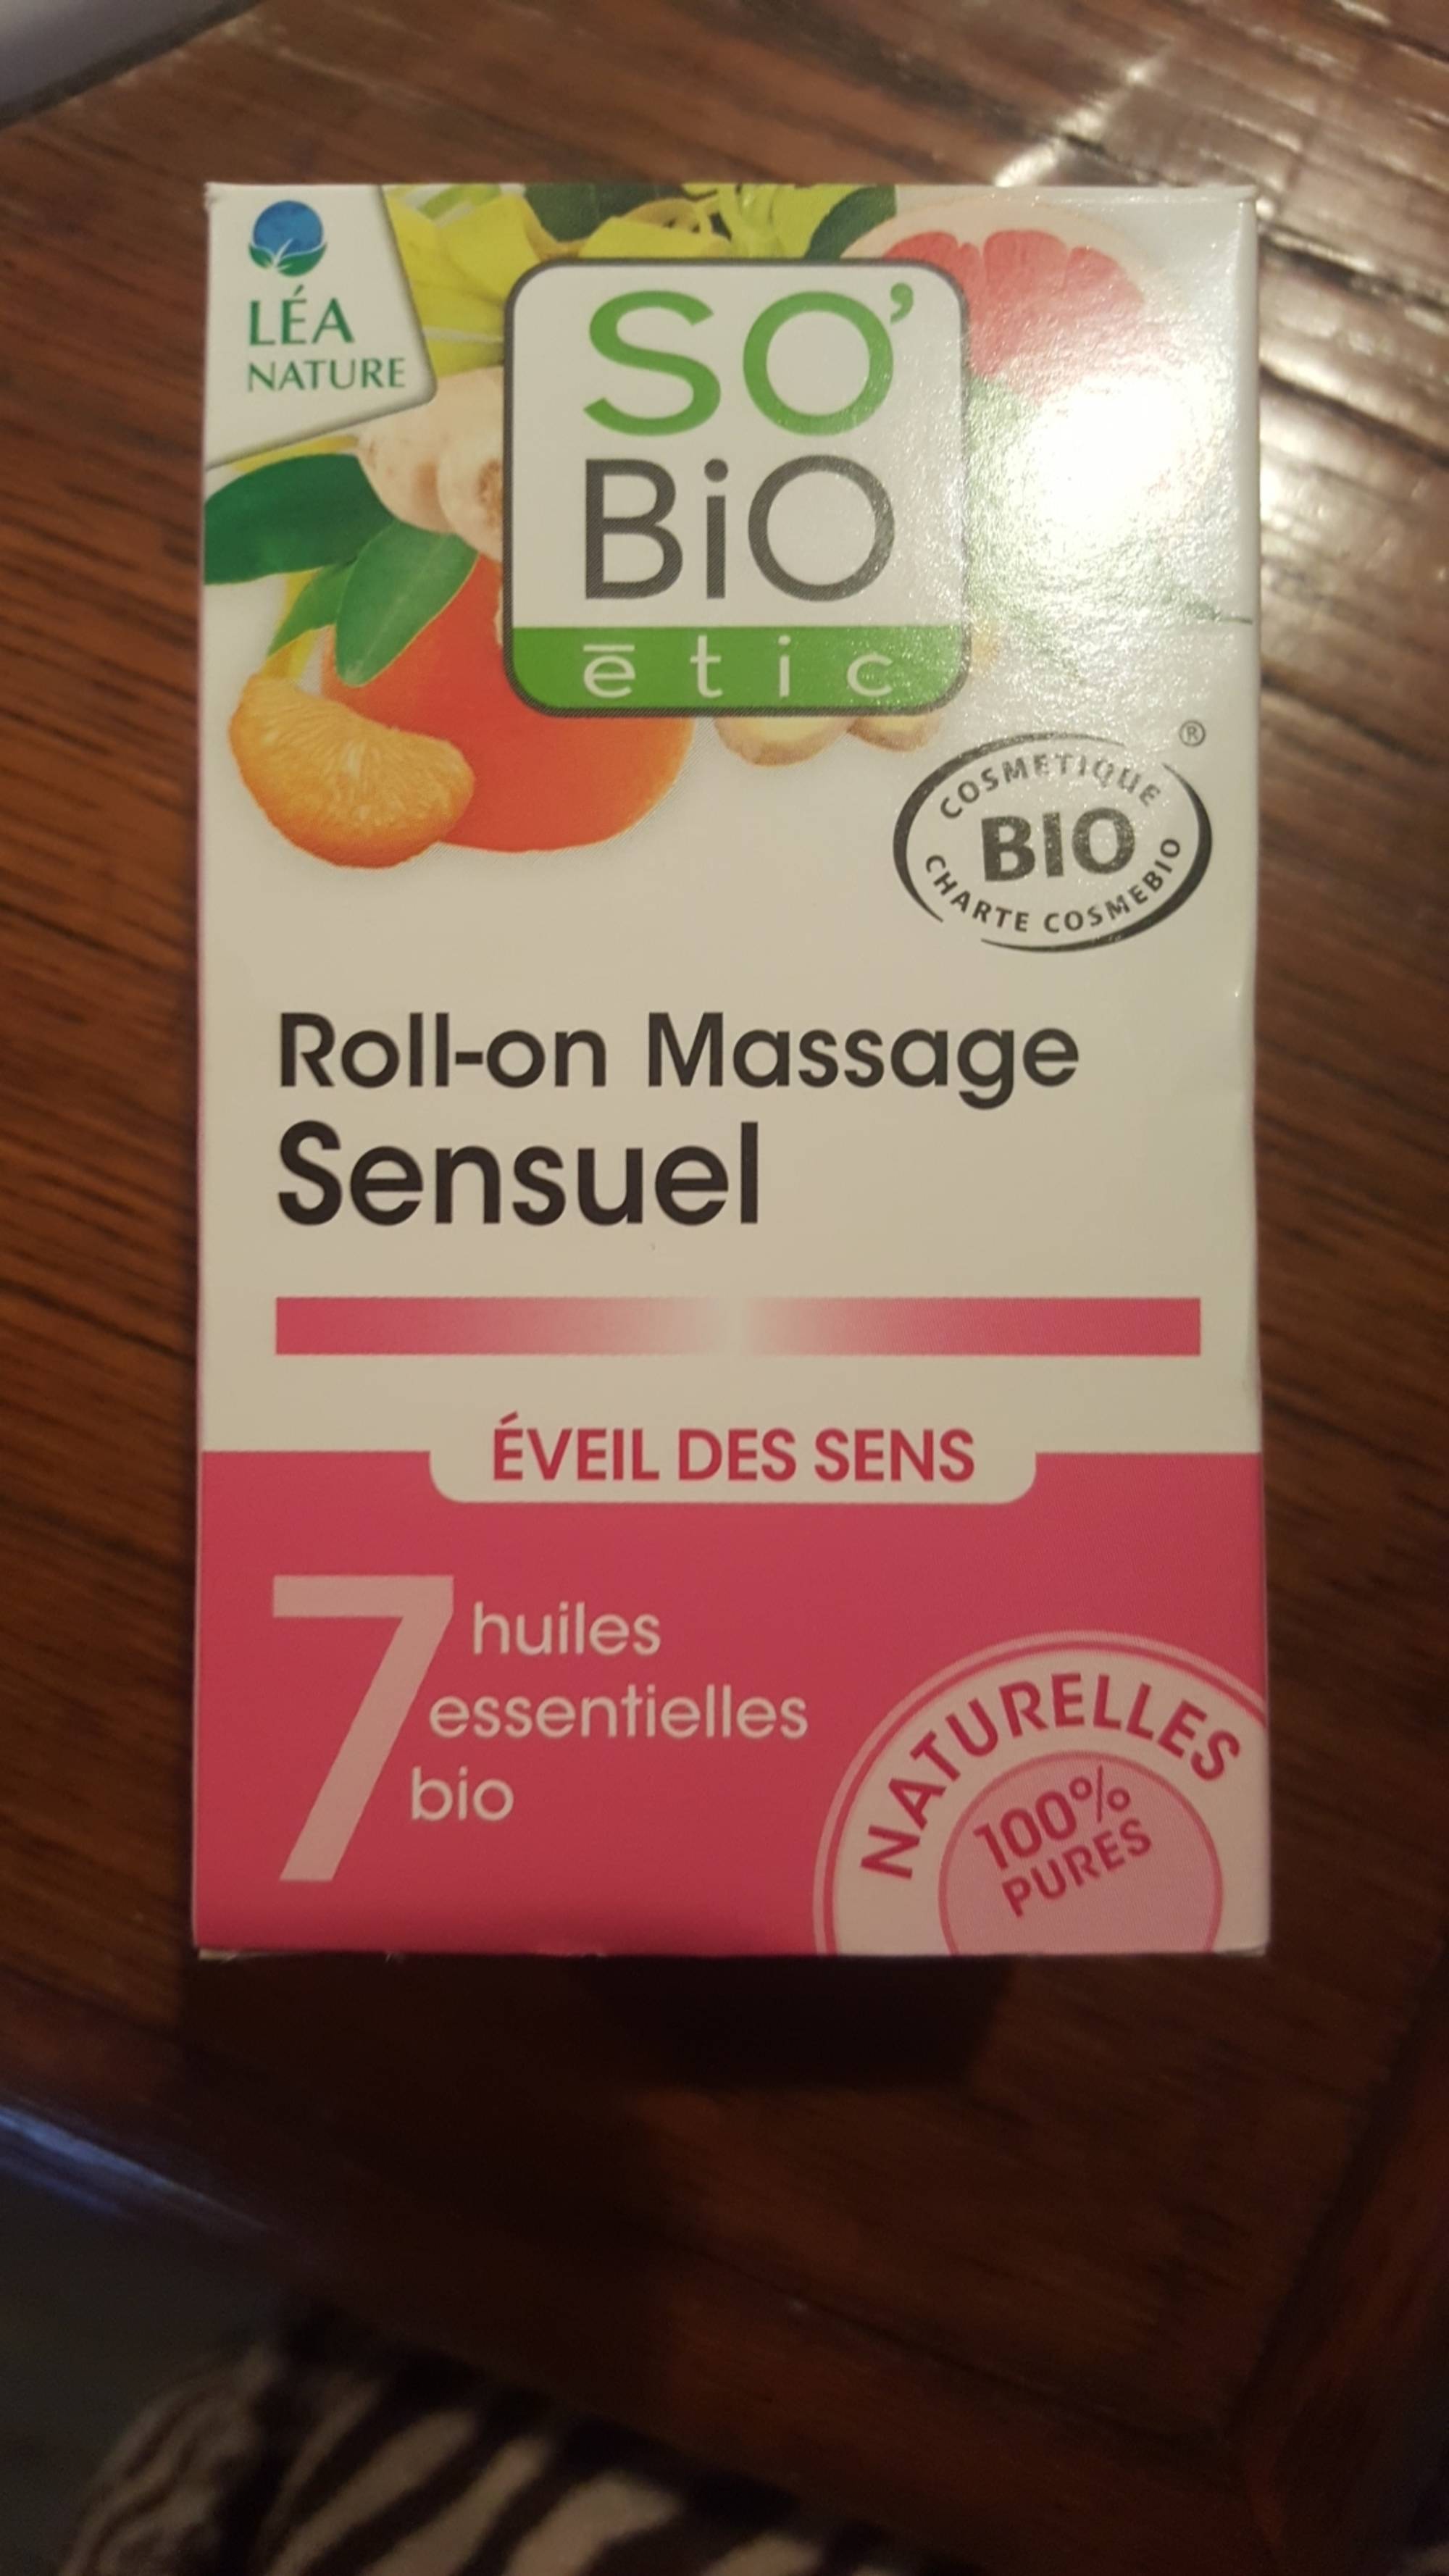 SO'BIO ÉTIC - Eveil des sens - Roll-on massage sensuel